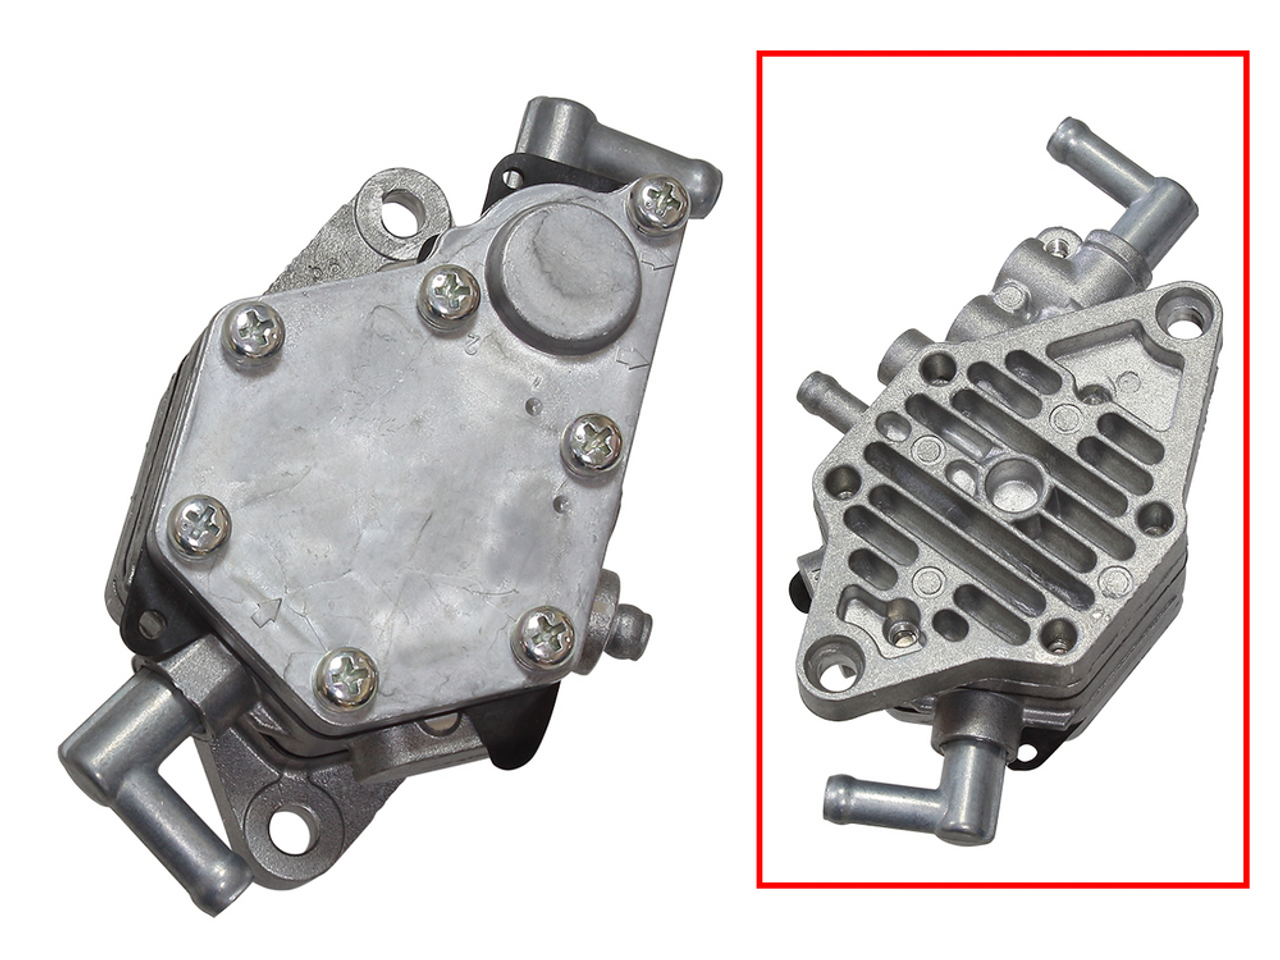 Replacement Fuel Pump compatible with Arctic Cat Part# 14-22302 OEM# 1670-230